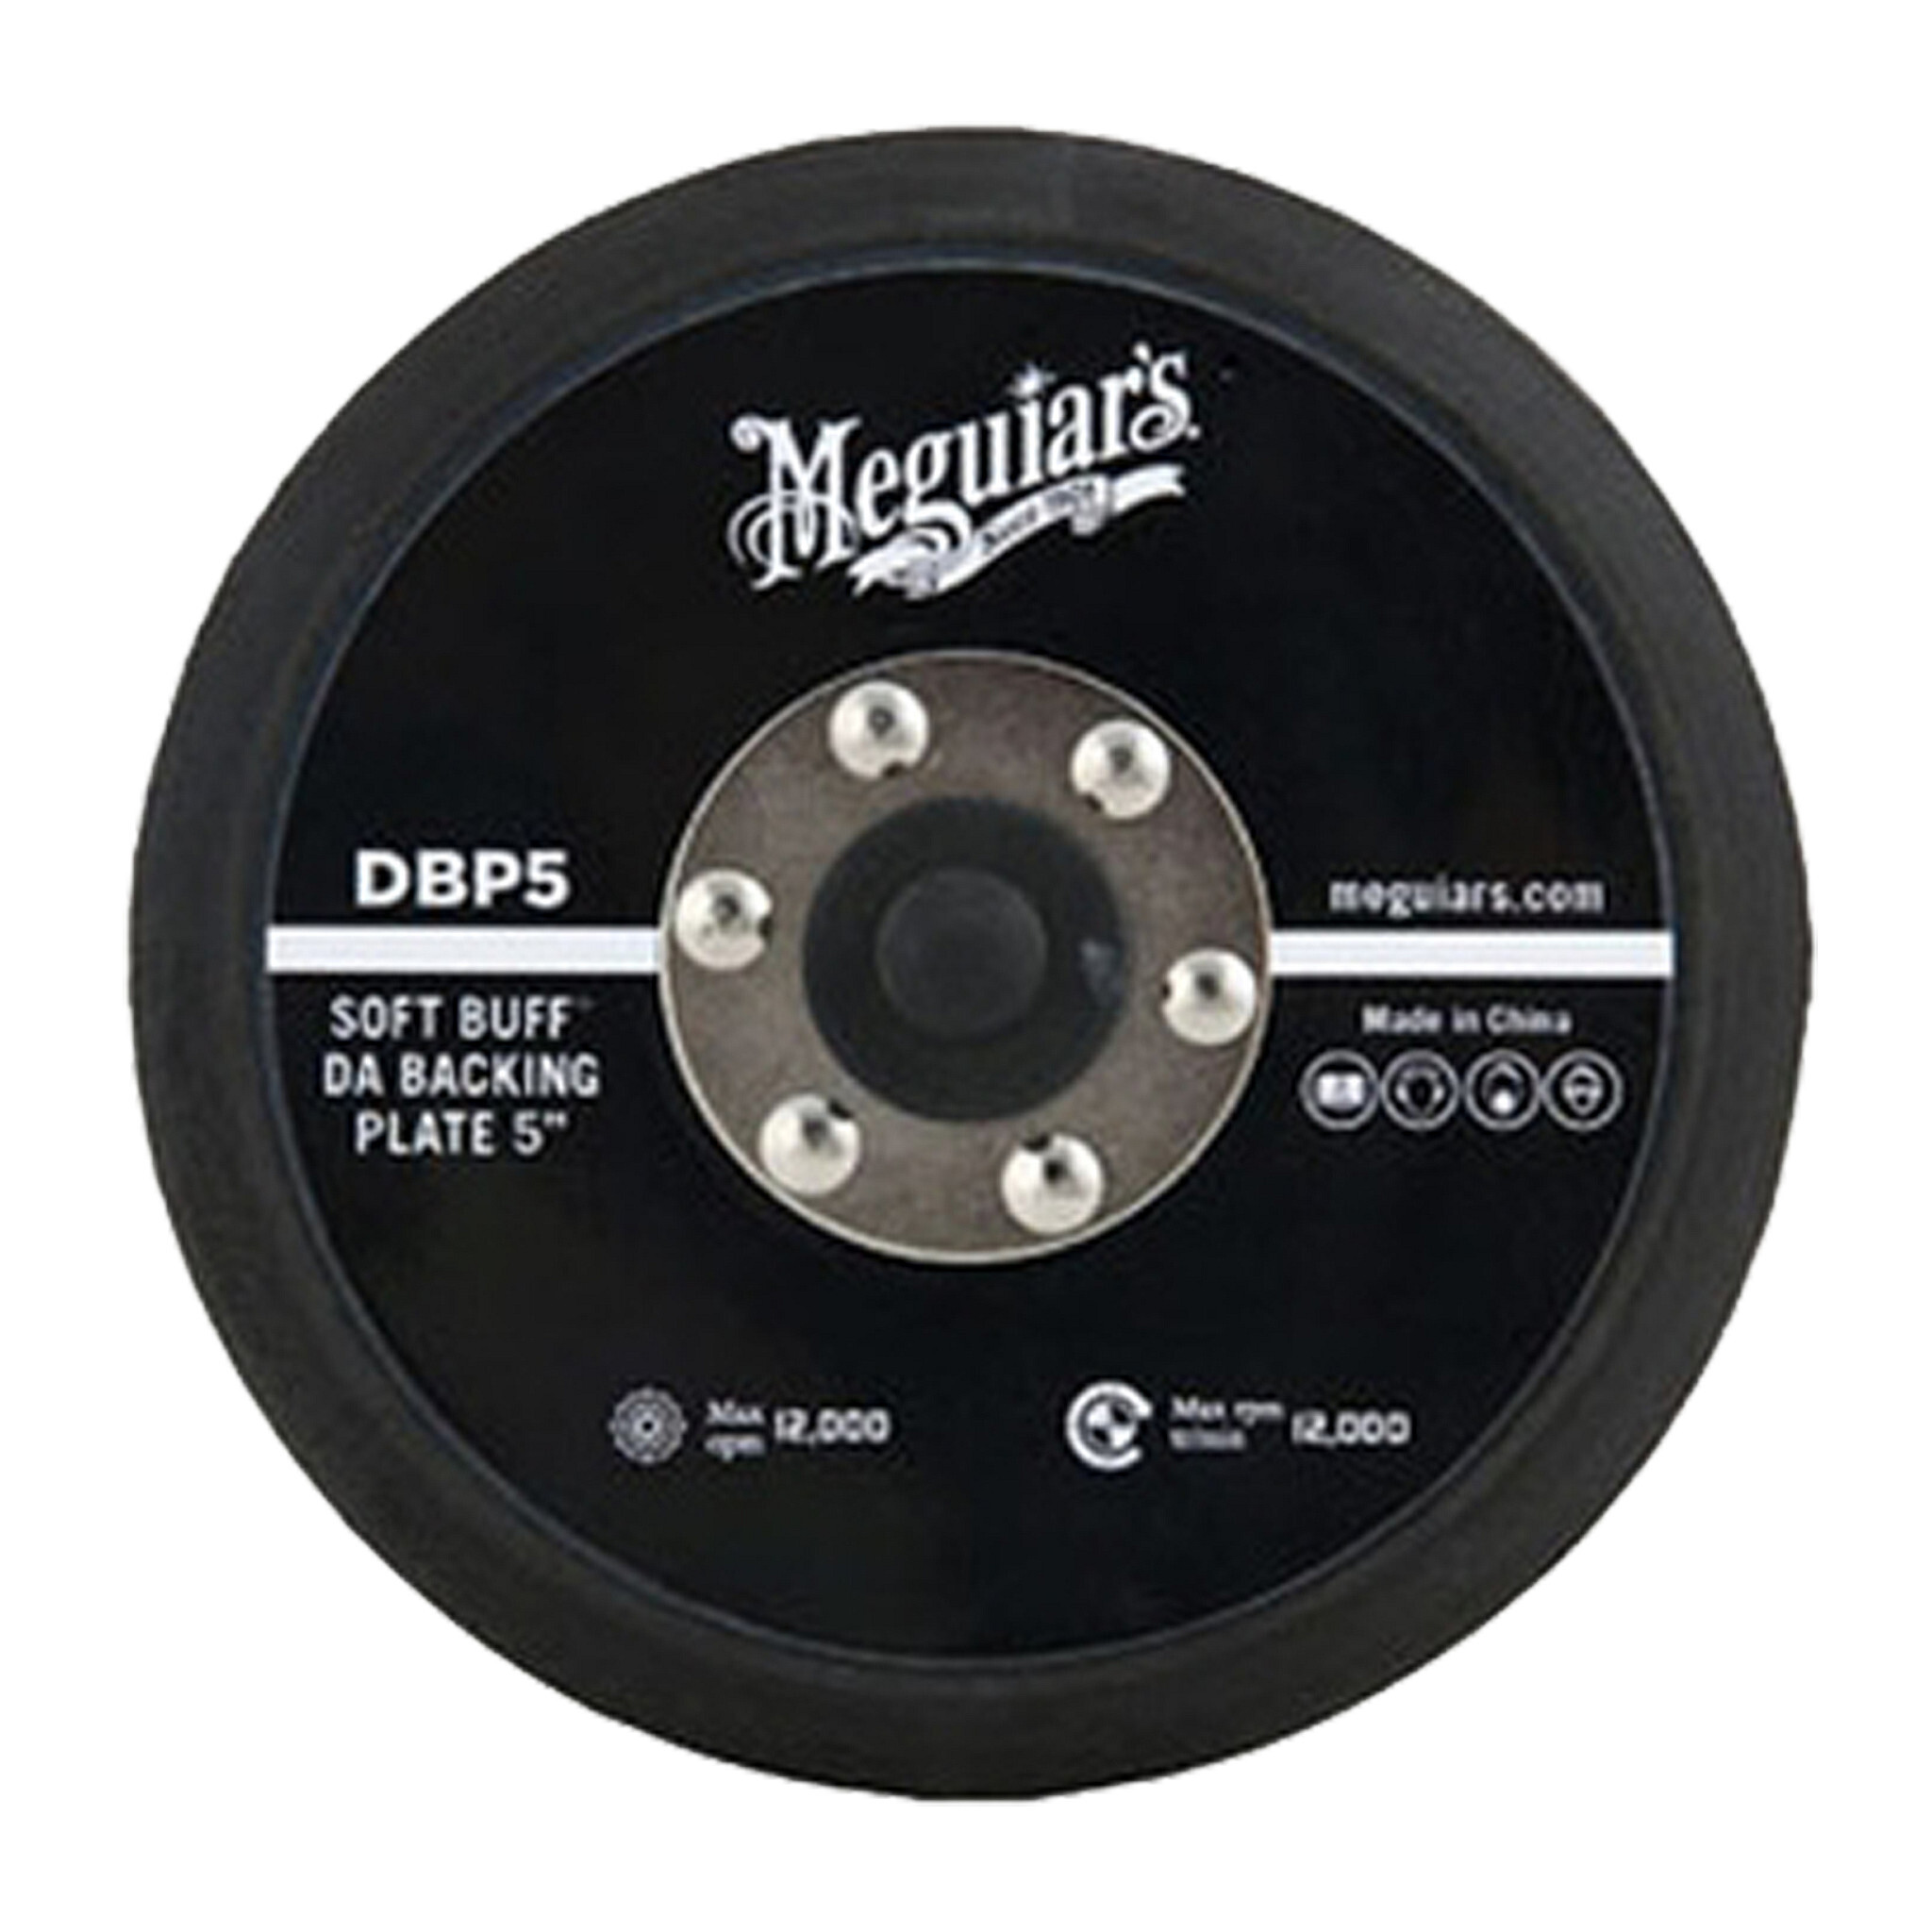 Meguiars DBP 5 Soft Buff DA Backing Plate 5 Inch